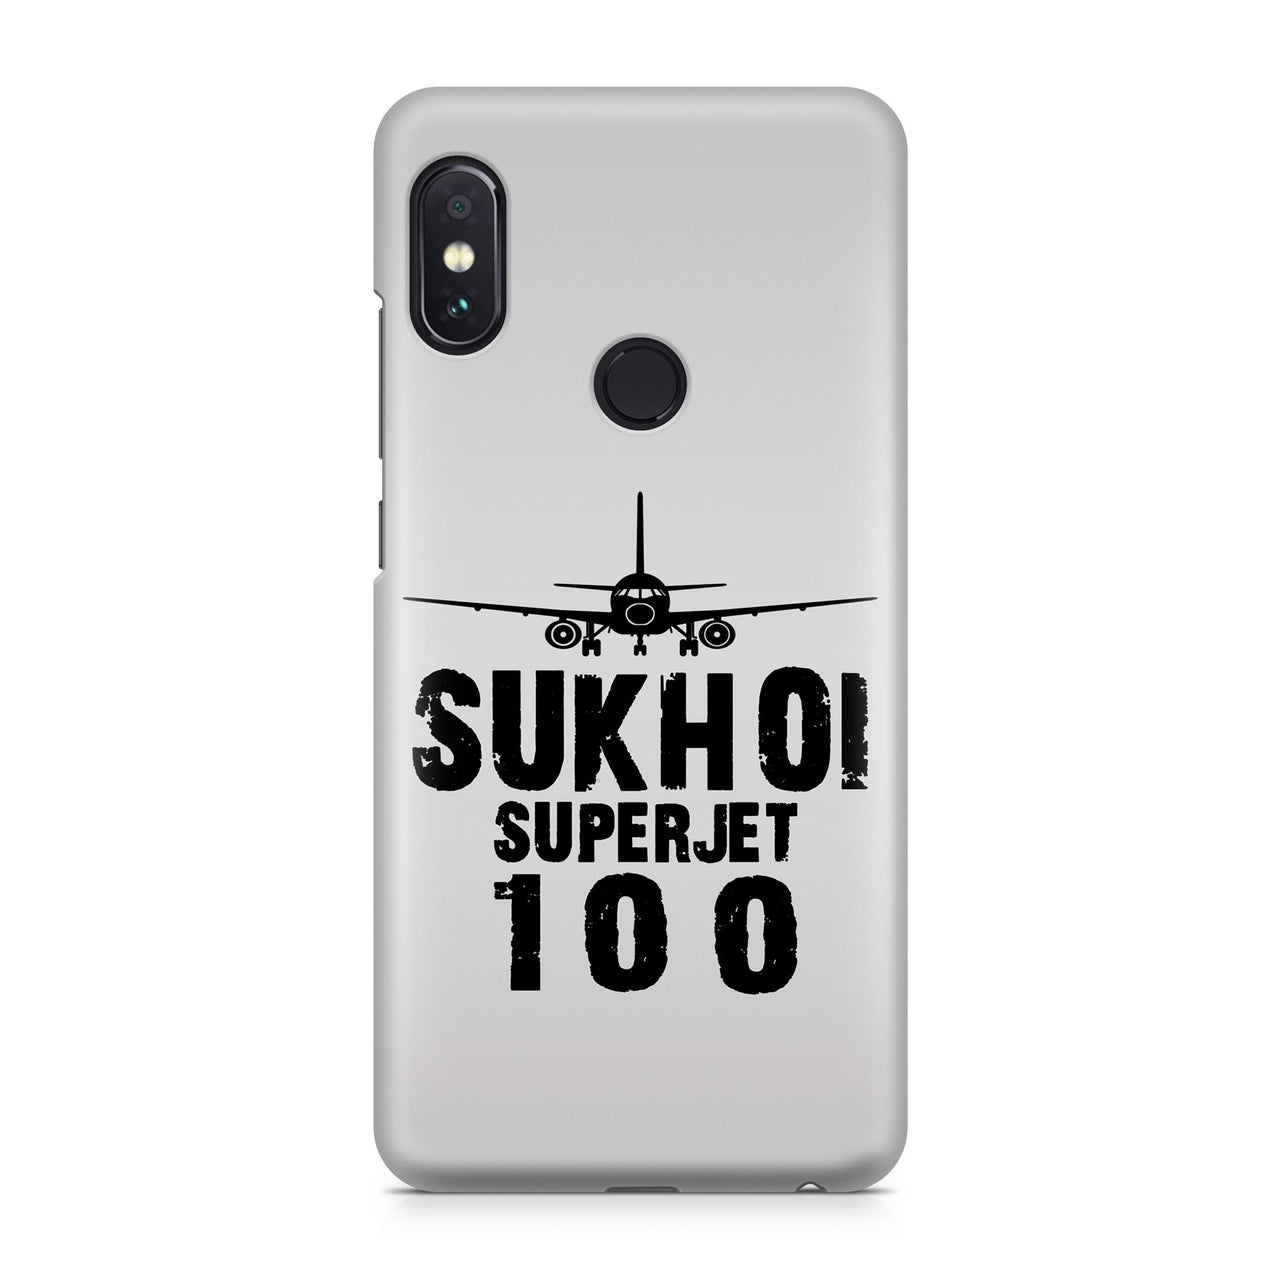 Sukhoi Superjet 100 Plane & Designed Xiaomi Cases